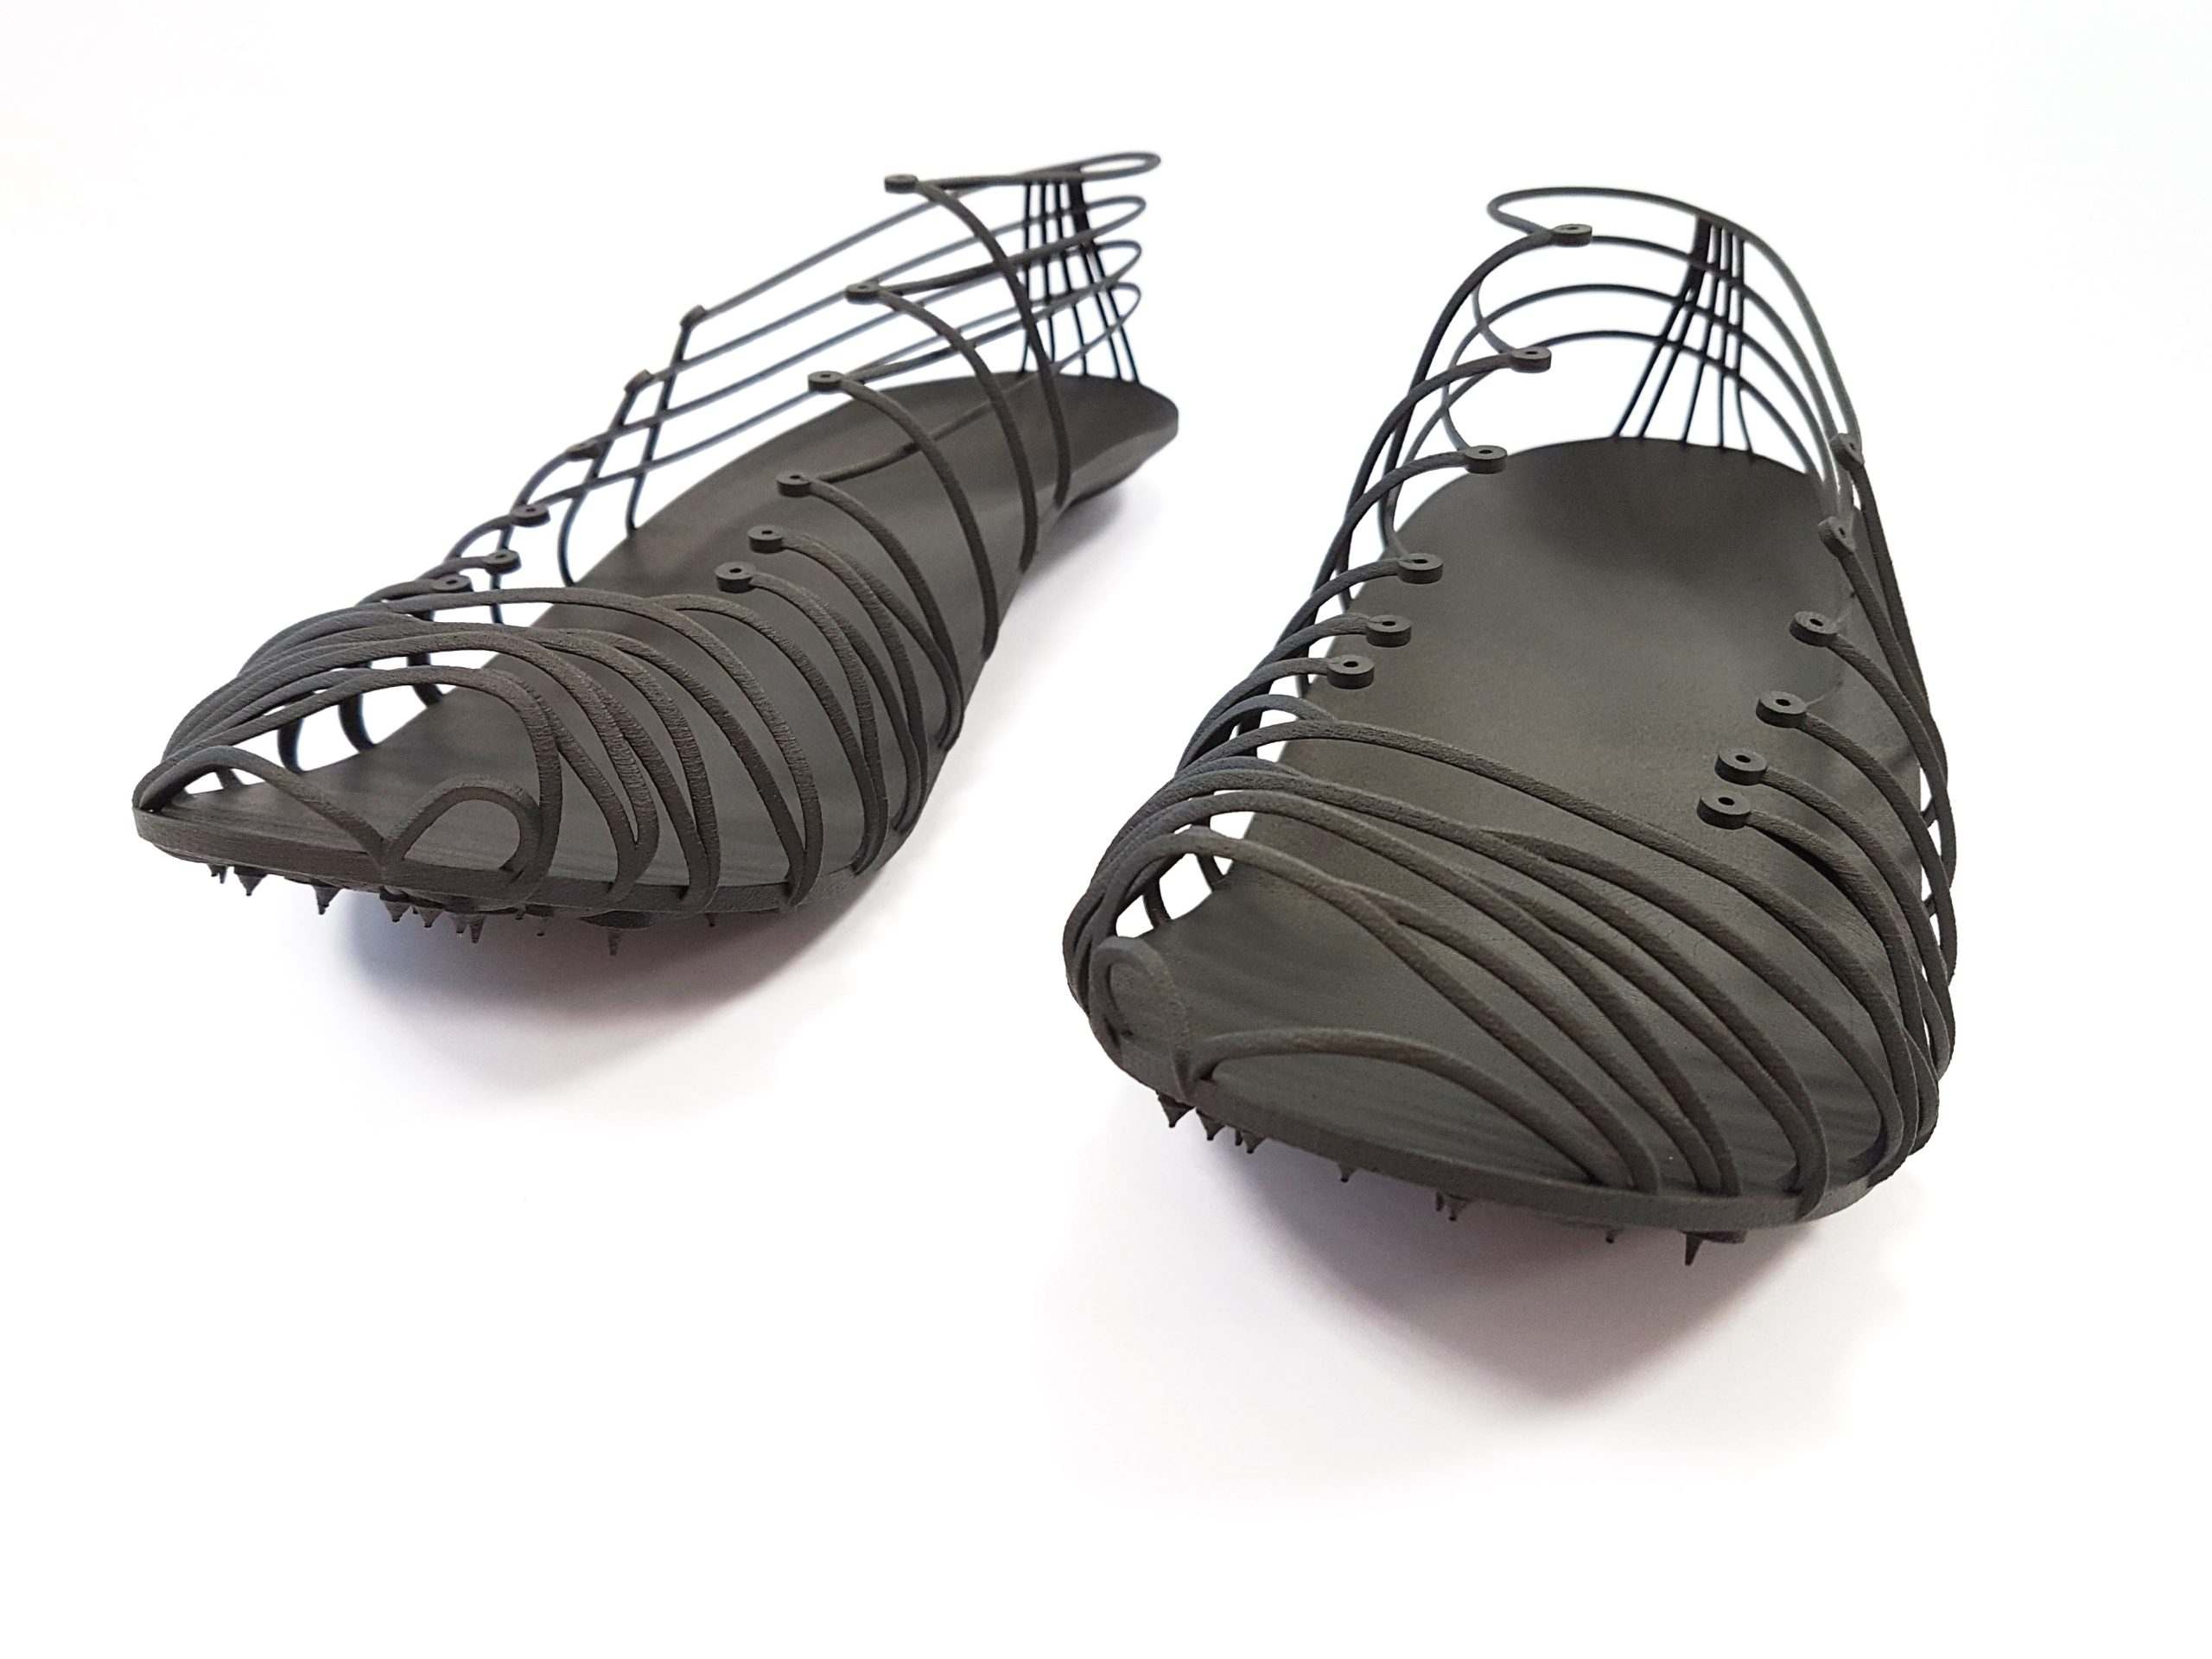 Pleko鞋是在CRP Technology的Windform SP碳纤维填充的复合材料中印刷的3D。通过CRP技术照片。